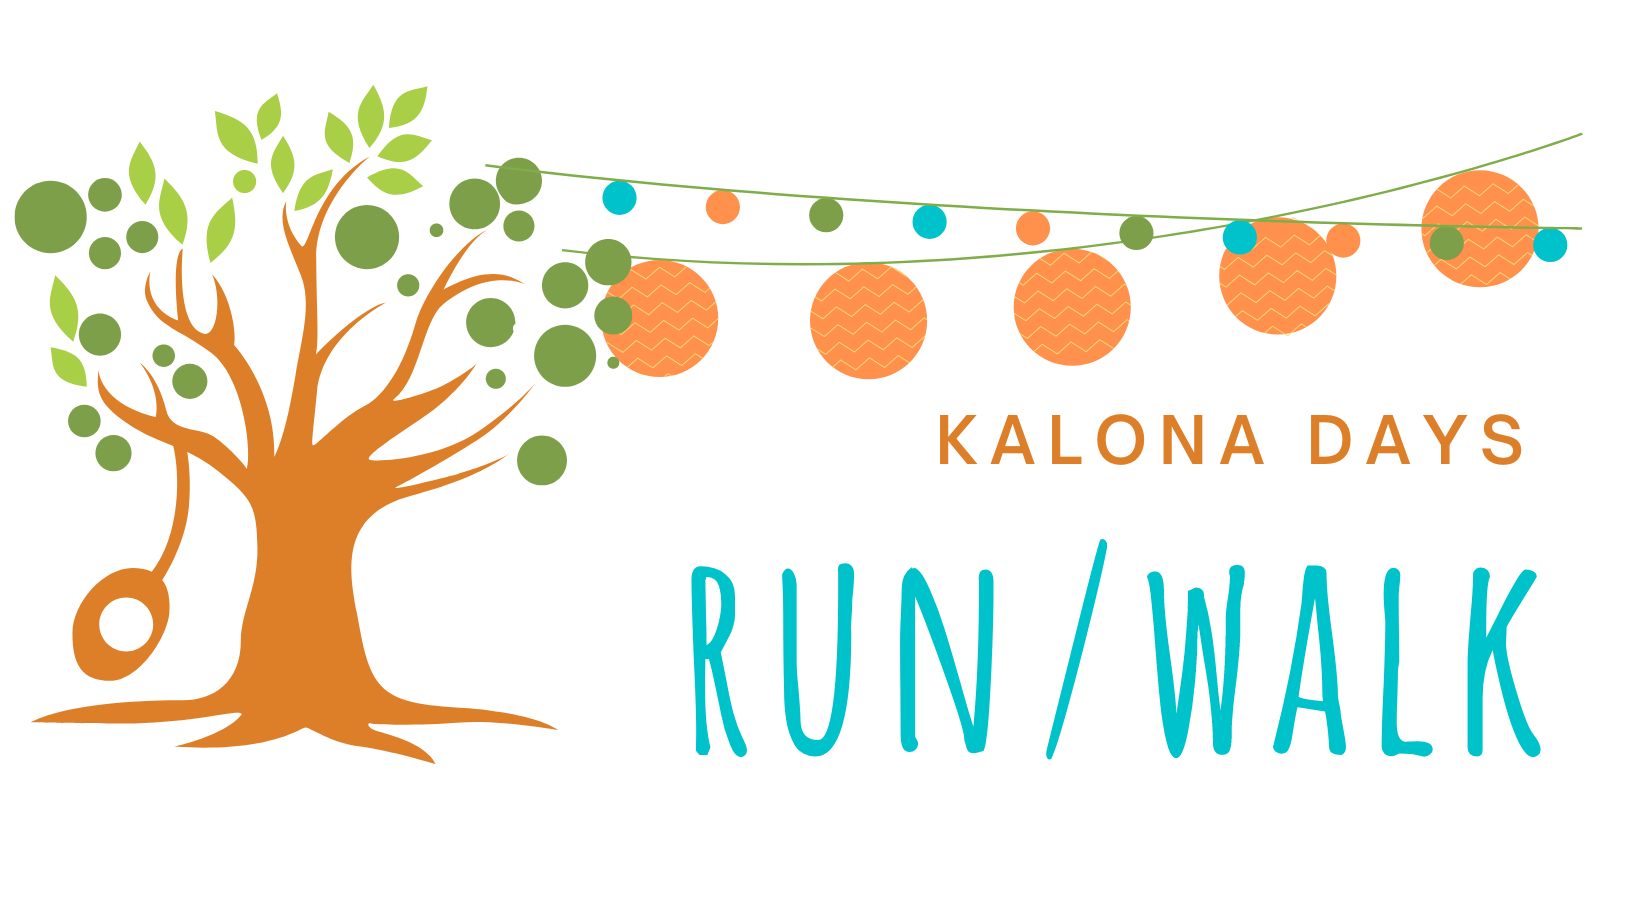 Kalona Days Fun Run/Walk logo on RaceRaves